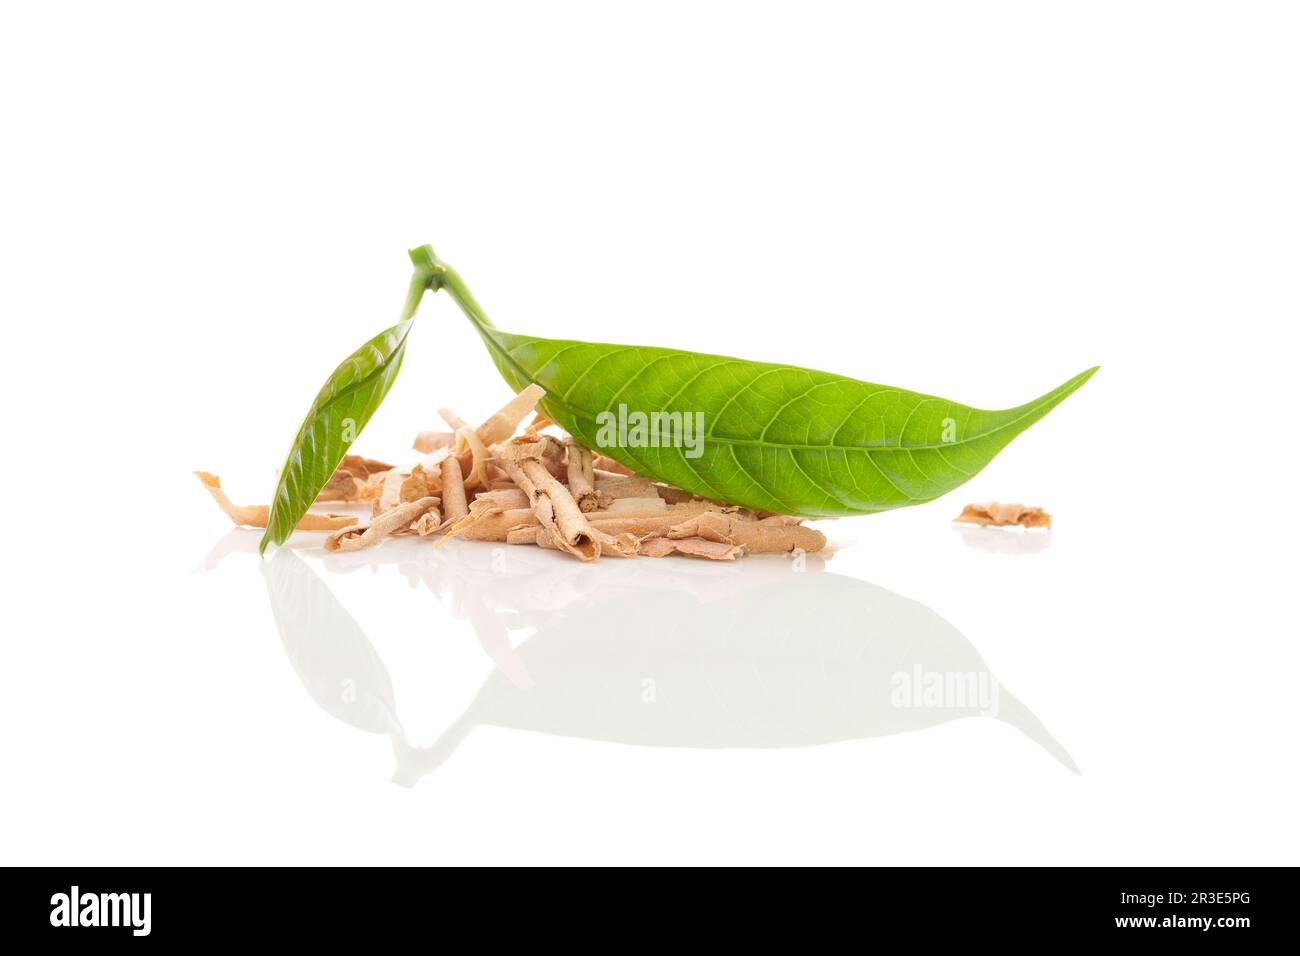 Sananga. Tabernaentana undaleta Wurzelrinde isoliert auf weißem Hintergrund  Stockfotografie - Alamy